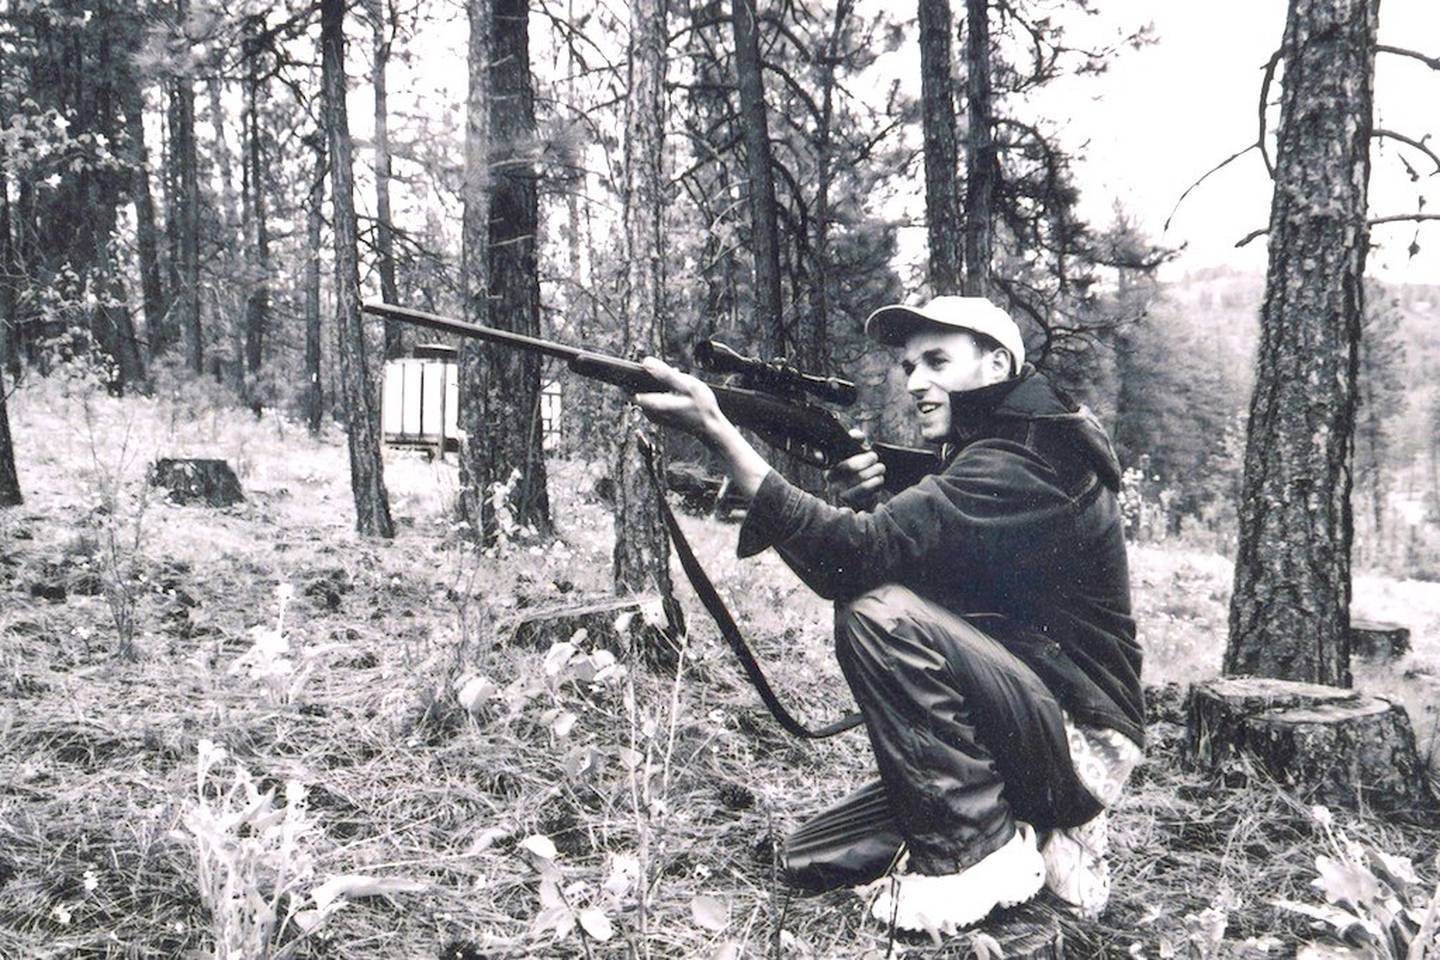 Vladimir Kostenko shooting a gun